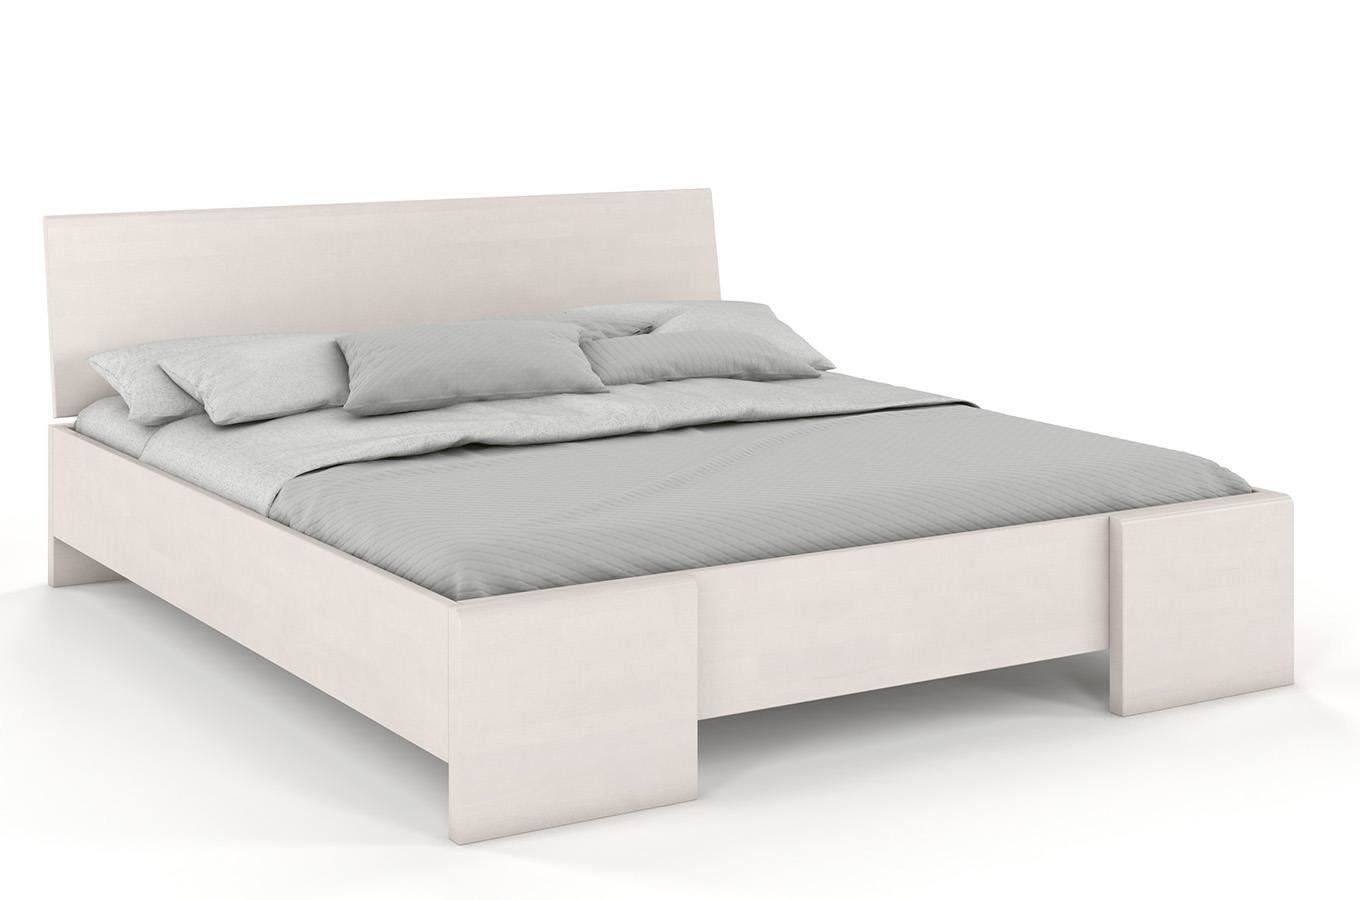 Łóżko drewniane bukowe Visby Hessler High / 200x200 cm, kolor biały